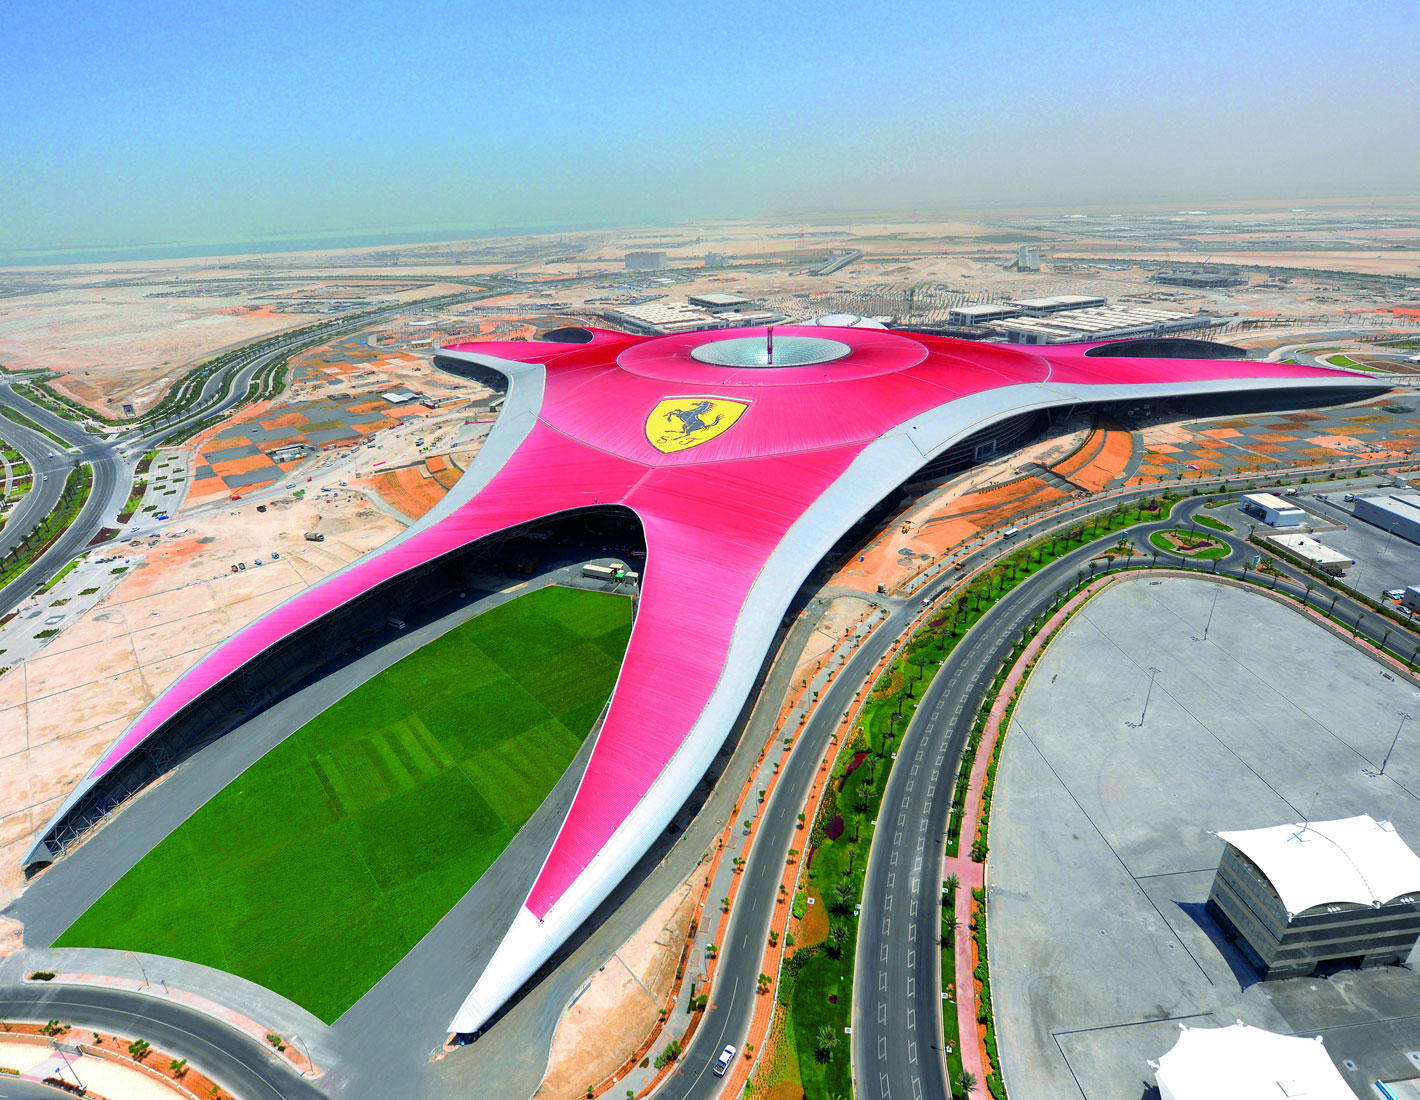 35.-Ferrari-World-Abu-Dhabi,-2010